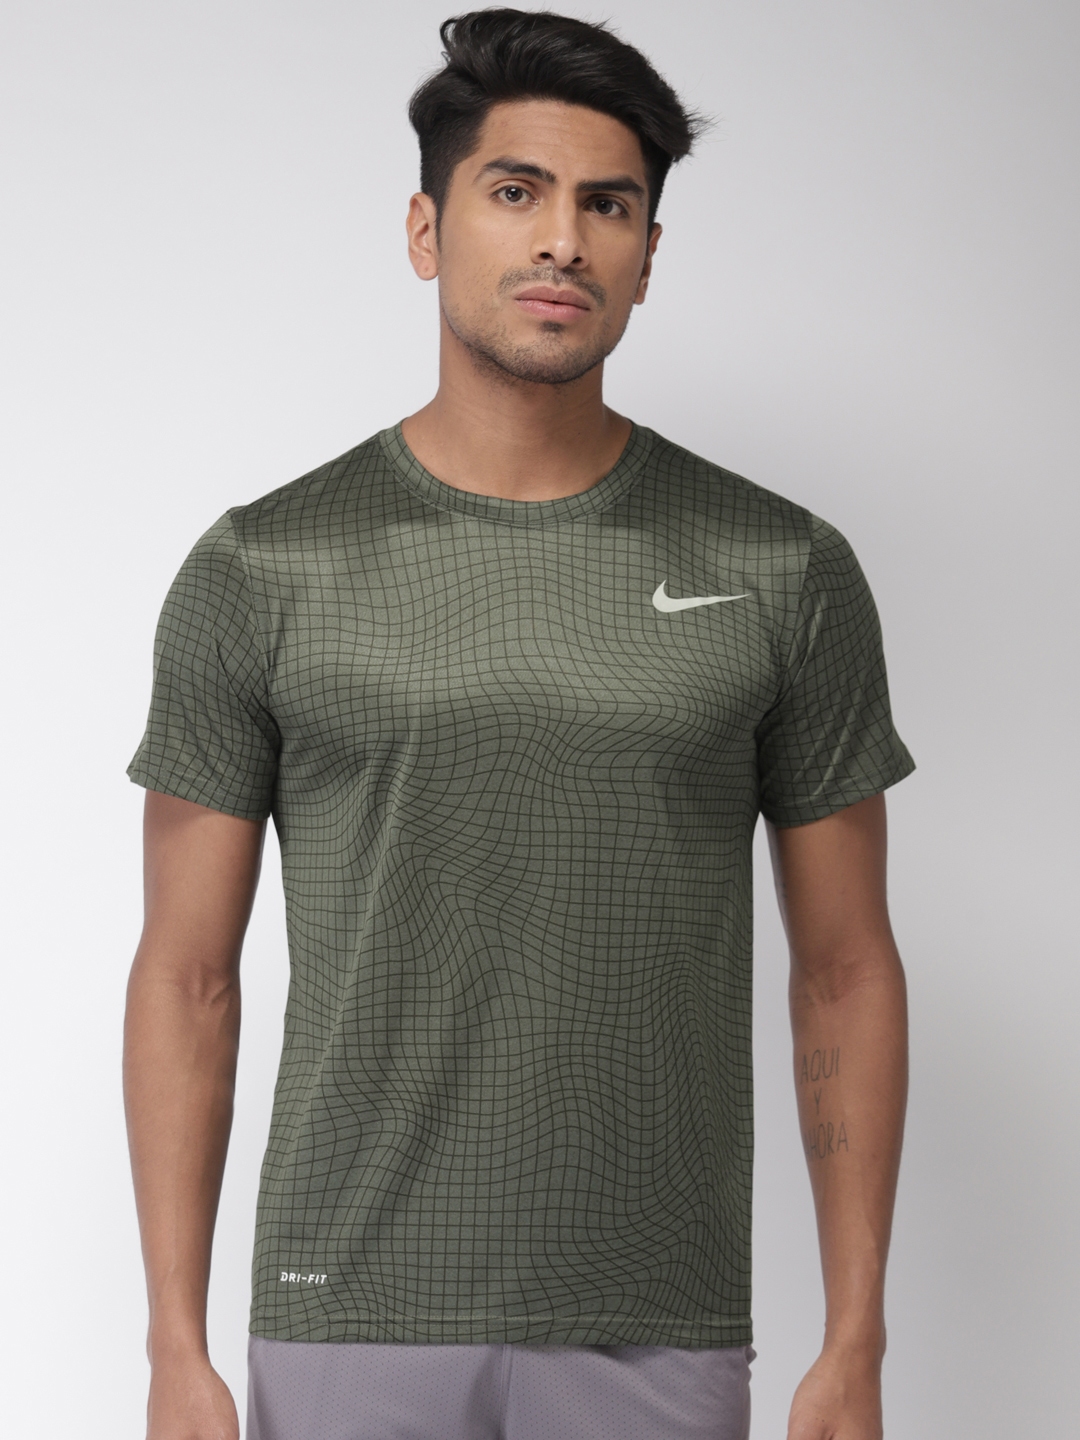 Buy Nike Men Grey \u0026 Olive Green 